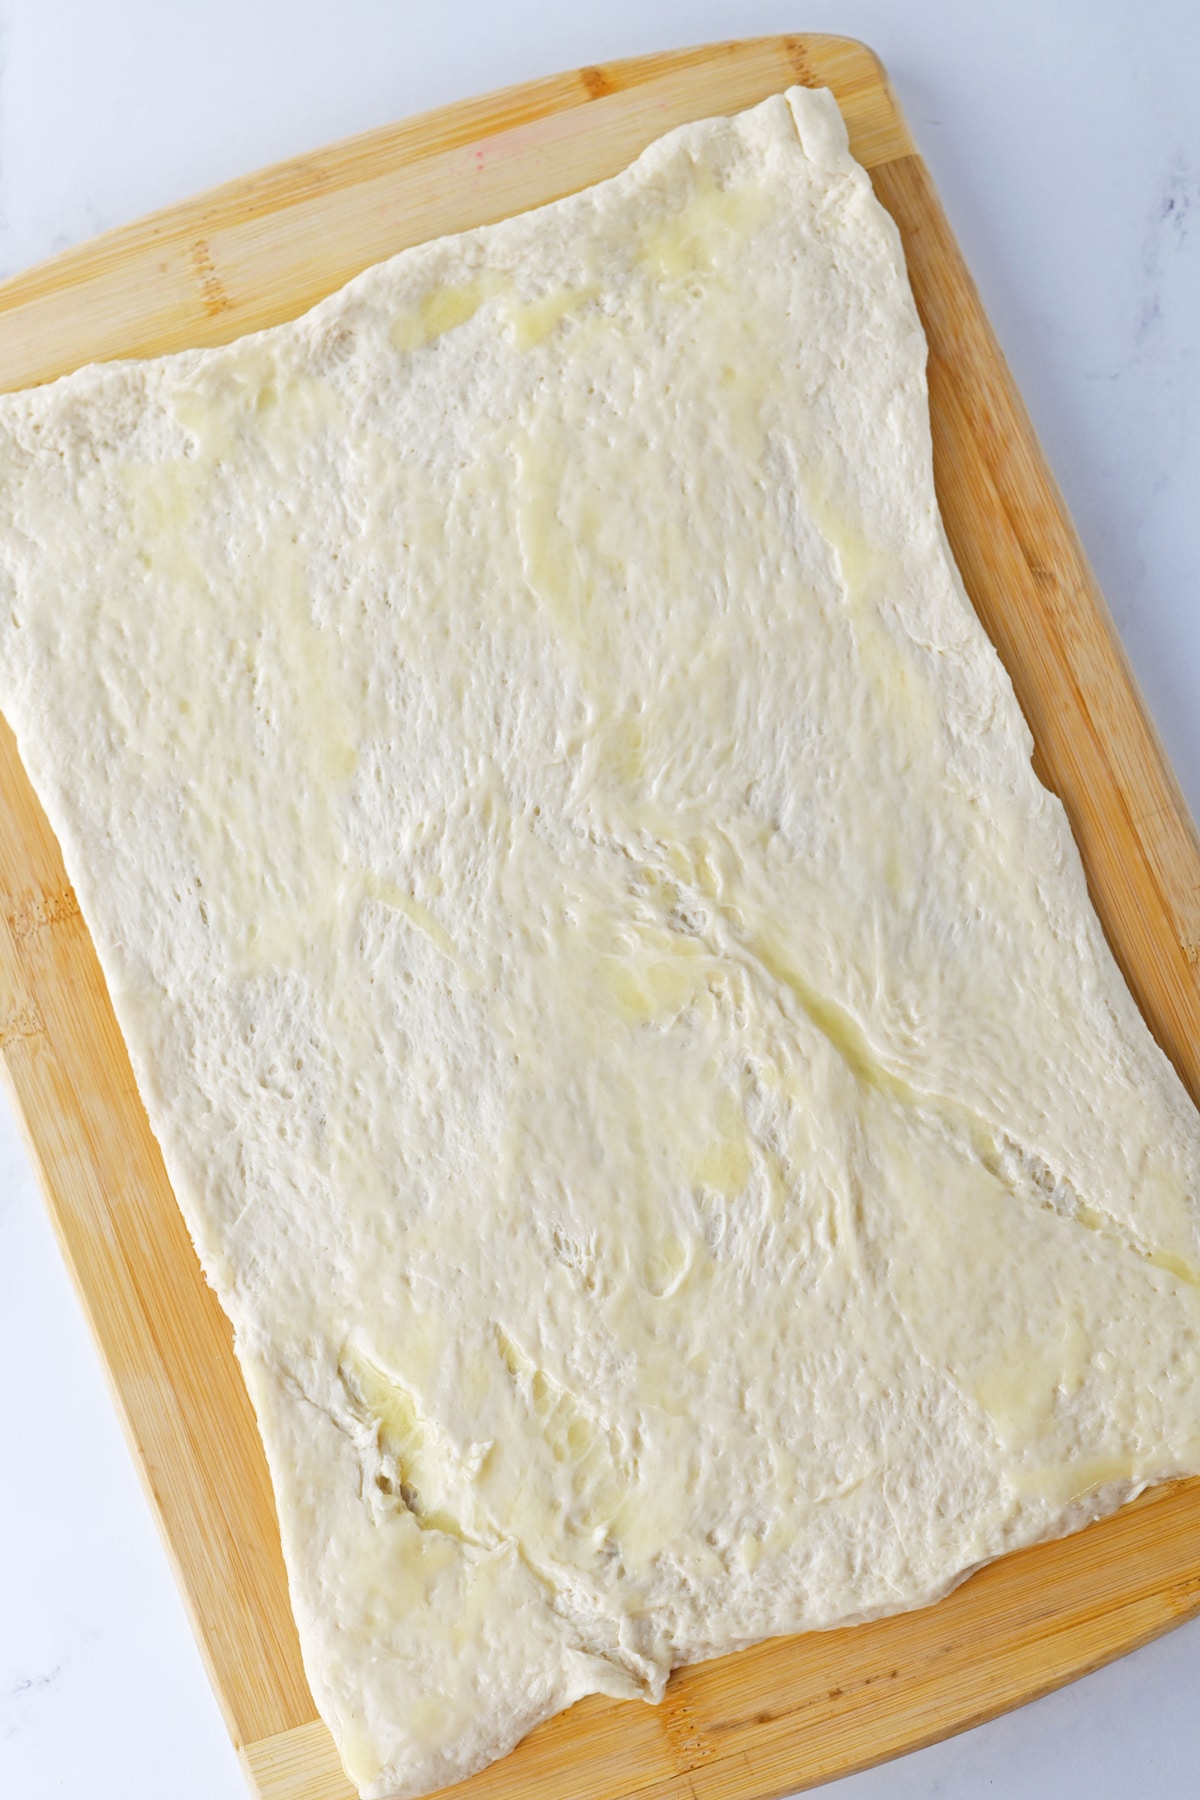 A piece of dough on a cutting board.